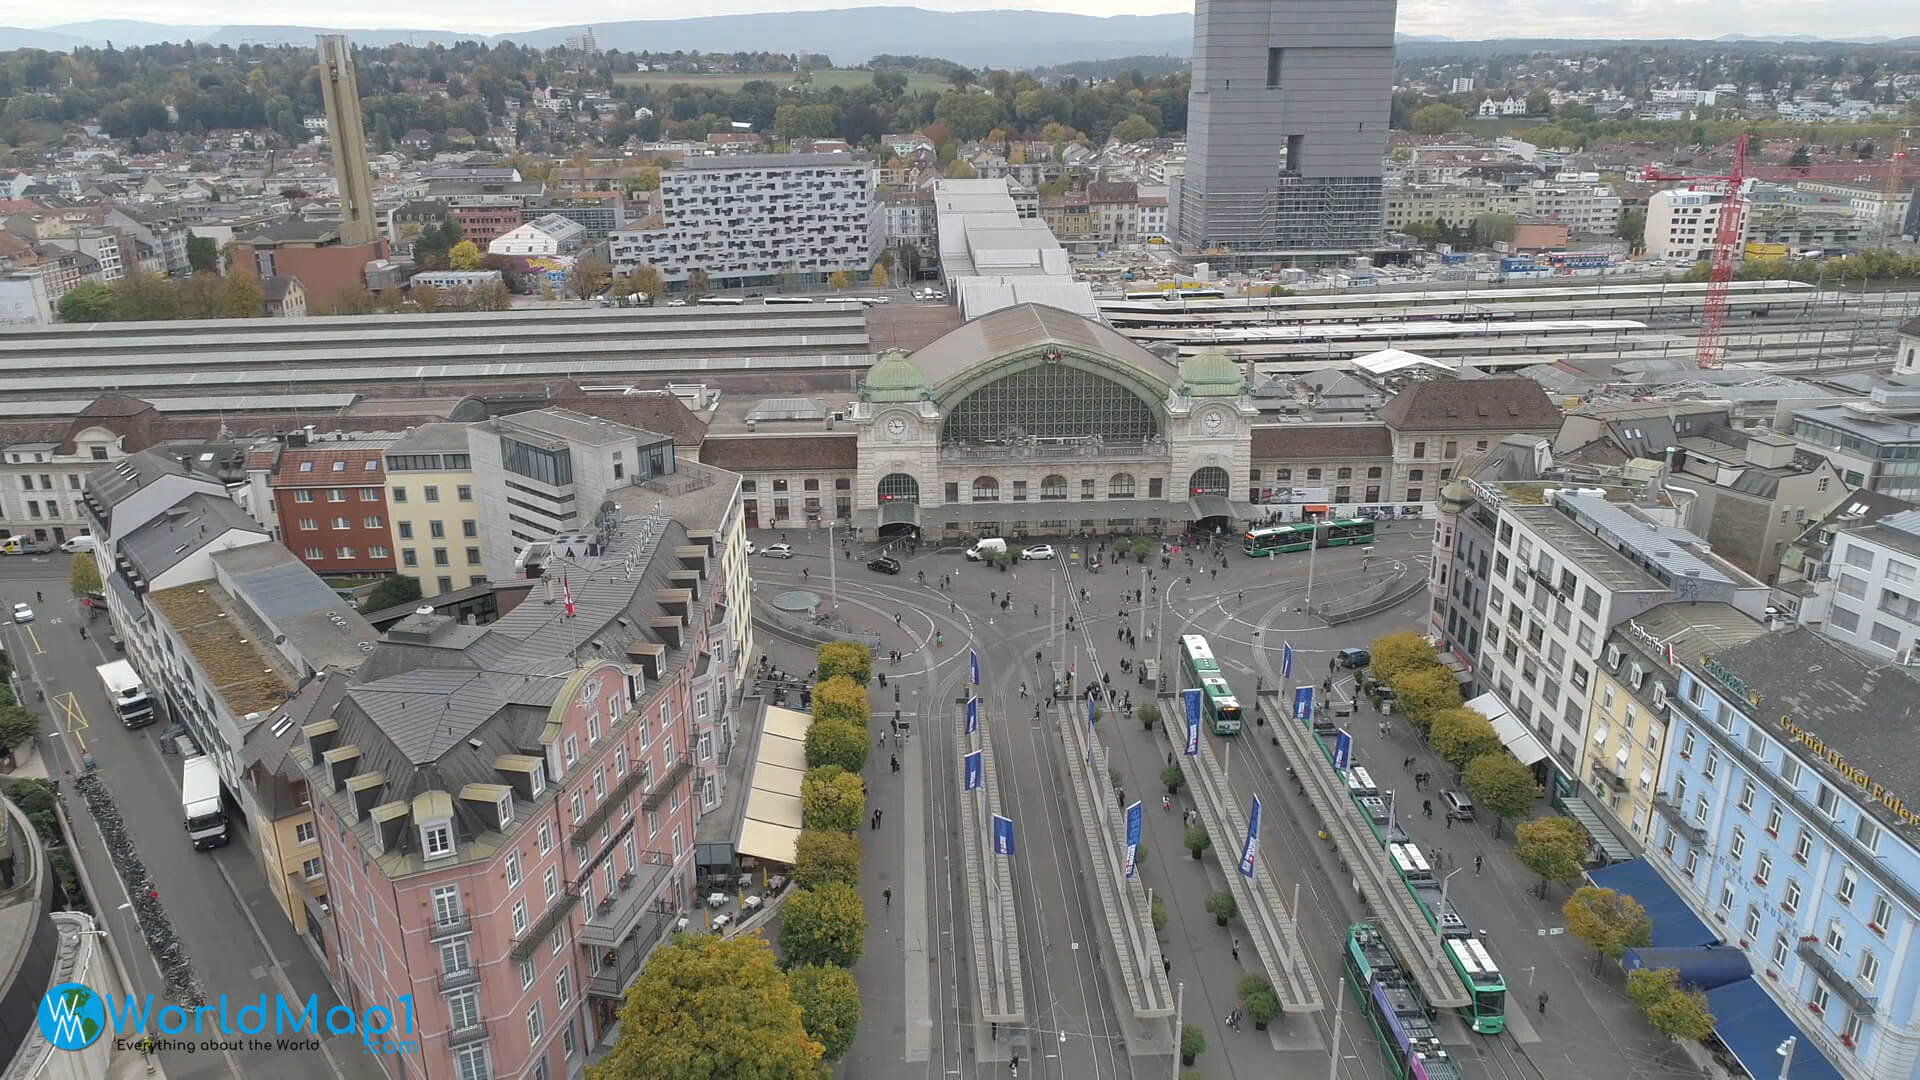 Basel SBB Station in Switzerland